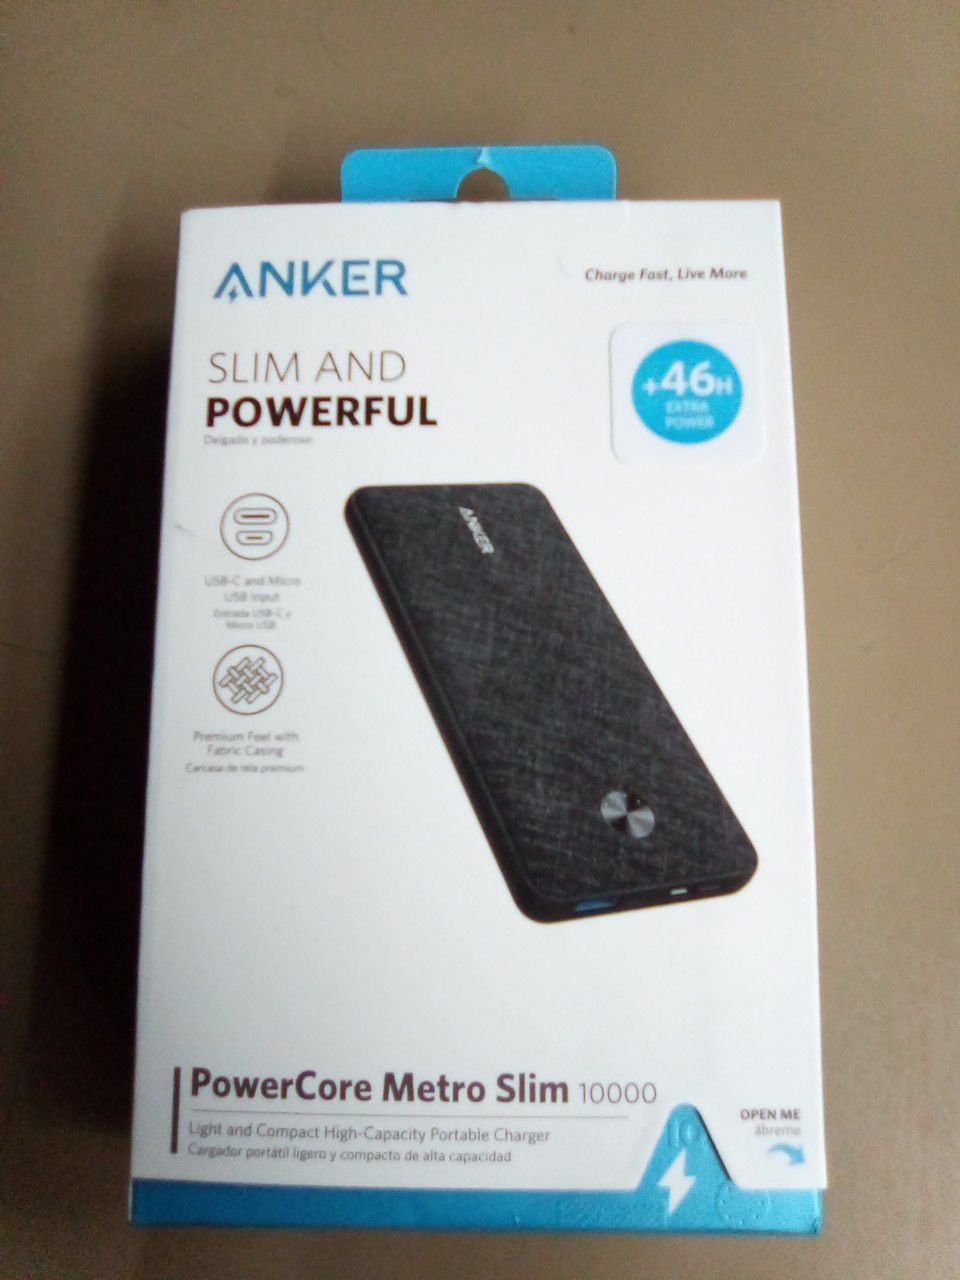 Anker PowerCore Metro Slim 10000 Rapid portable charger